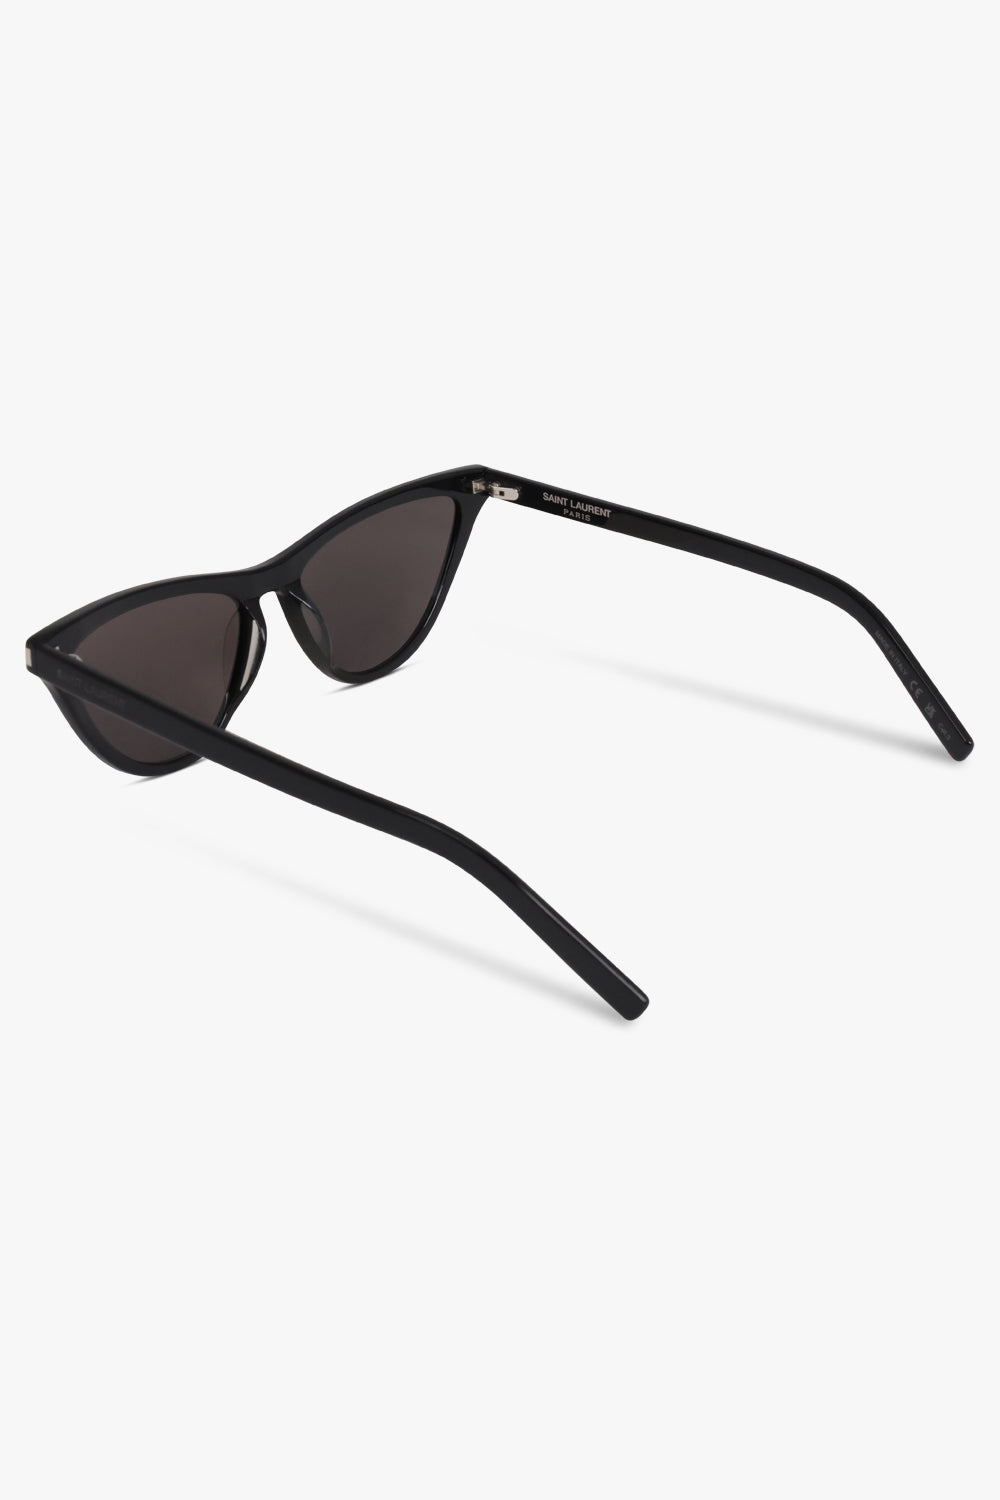 SAINT LAURENT ACCESSORIES BLACK / BLACK-BLACK-BLACK SL 550 Slim Cat Eye Sunglasses | Black